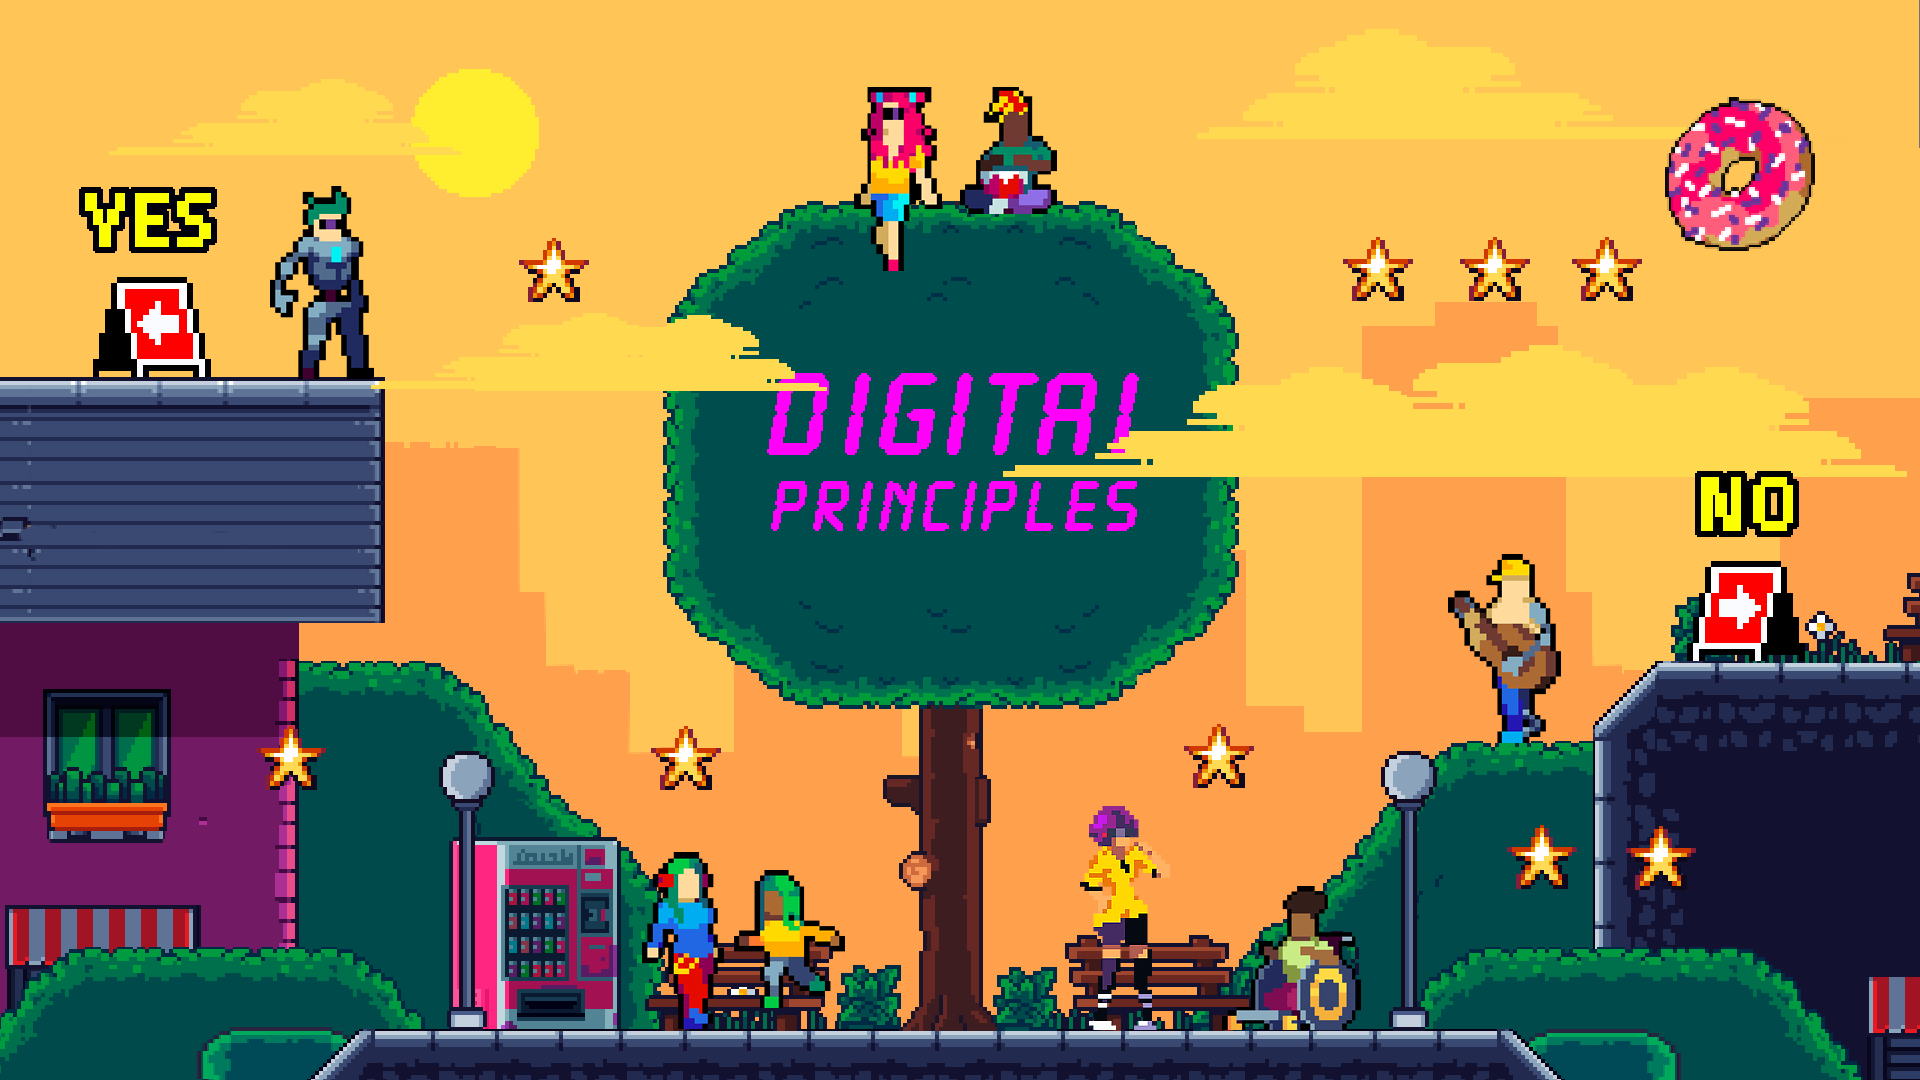 Digitale principper videospil plakat